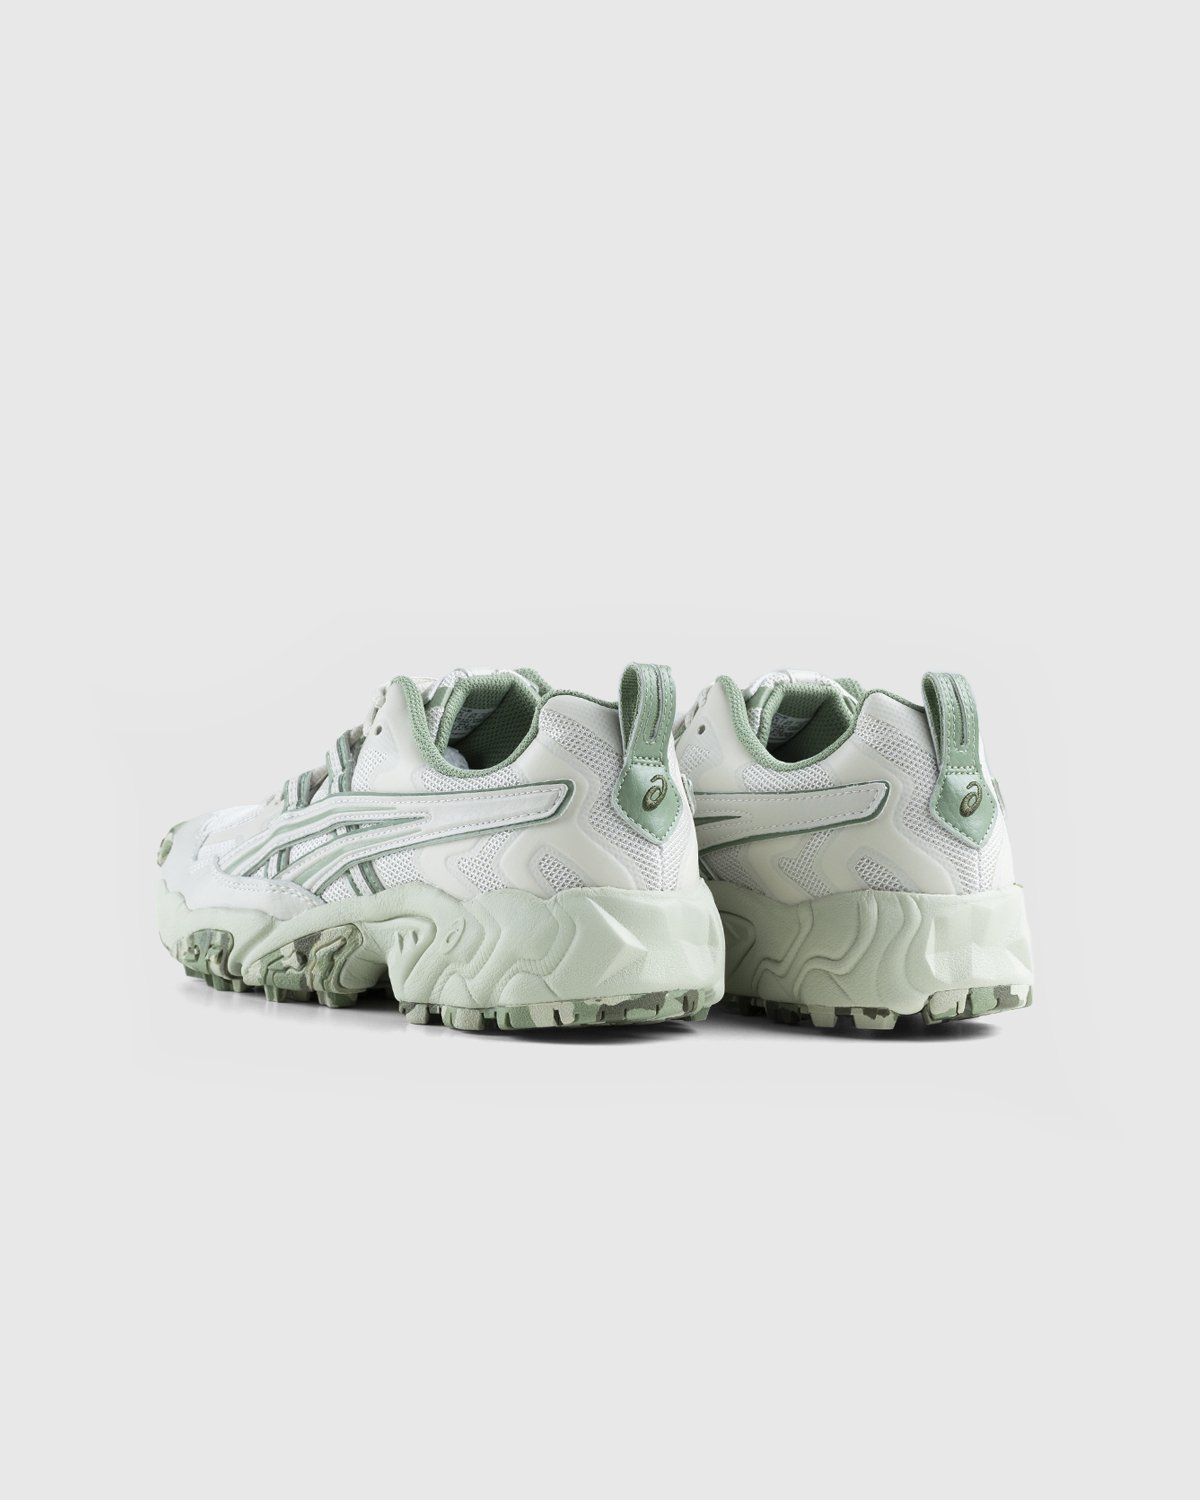 asics – Gel Nandi Smoke Grey Swamp Green - Low Top Sneakers - Grey - Image 4